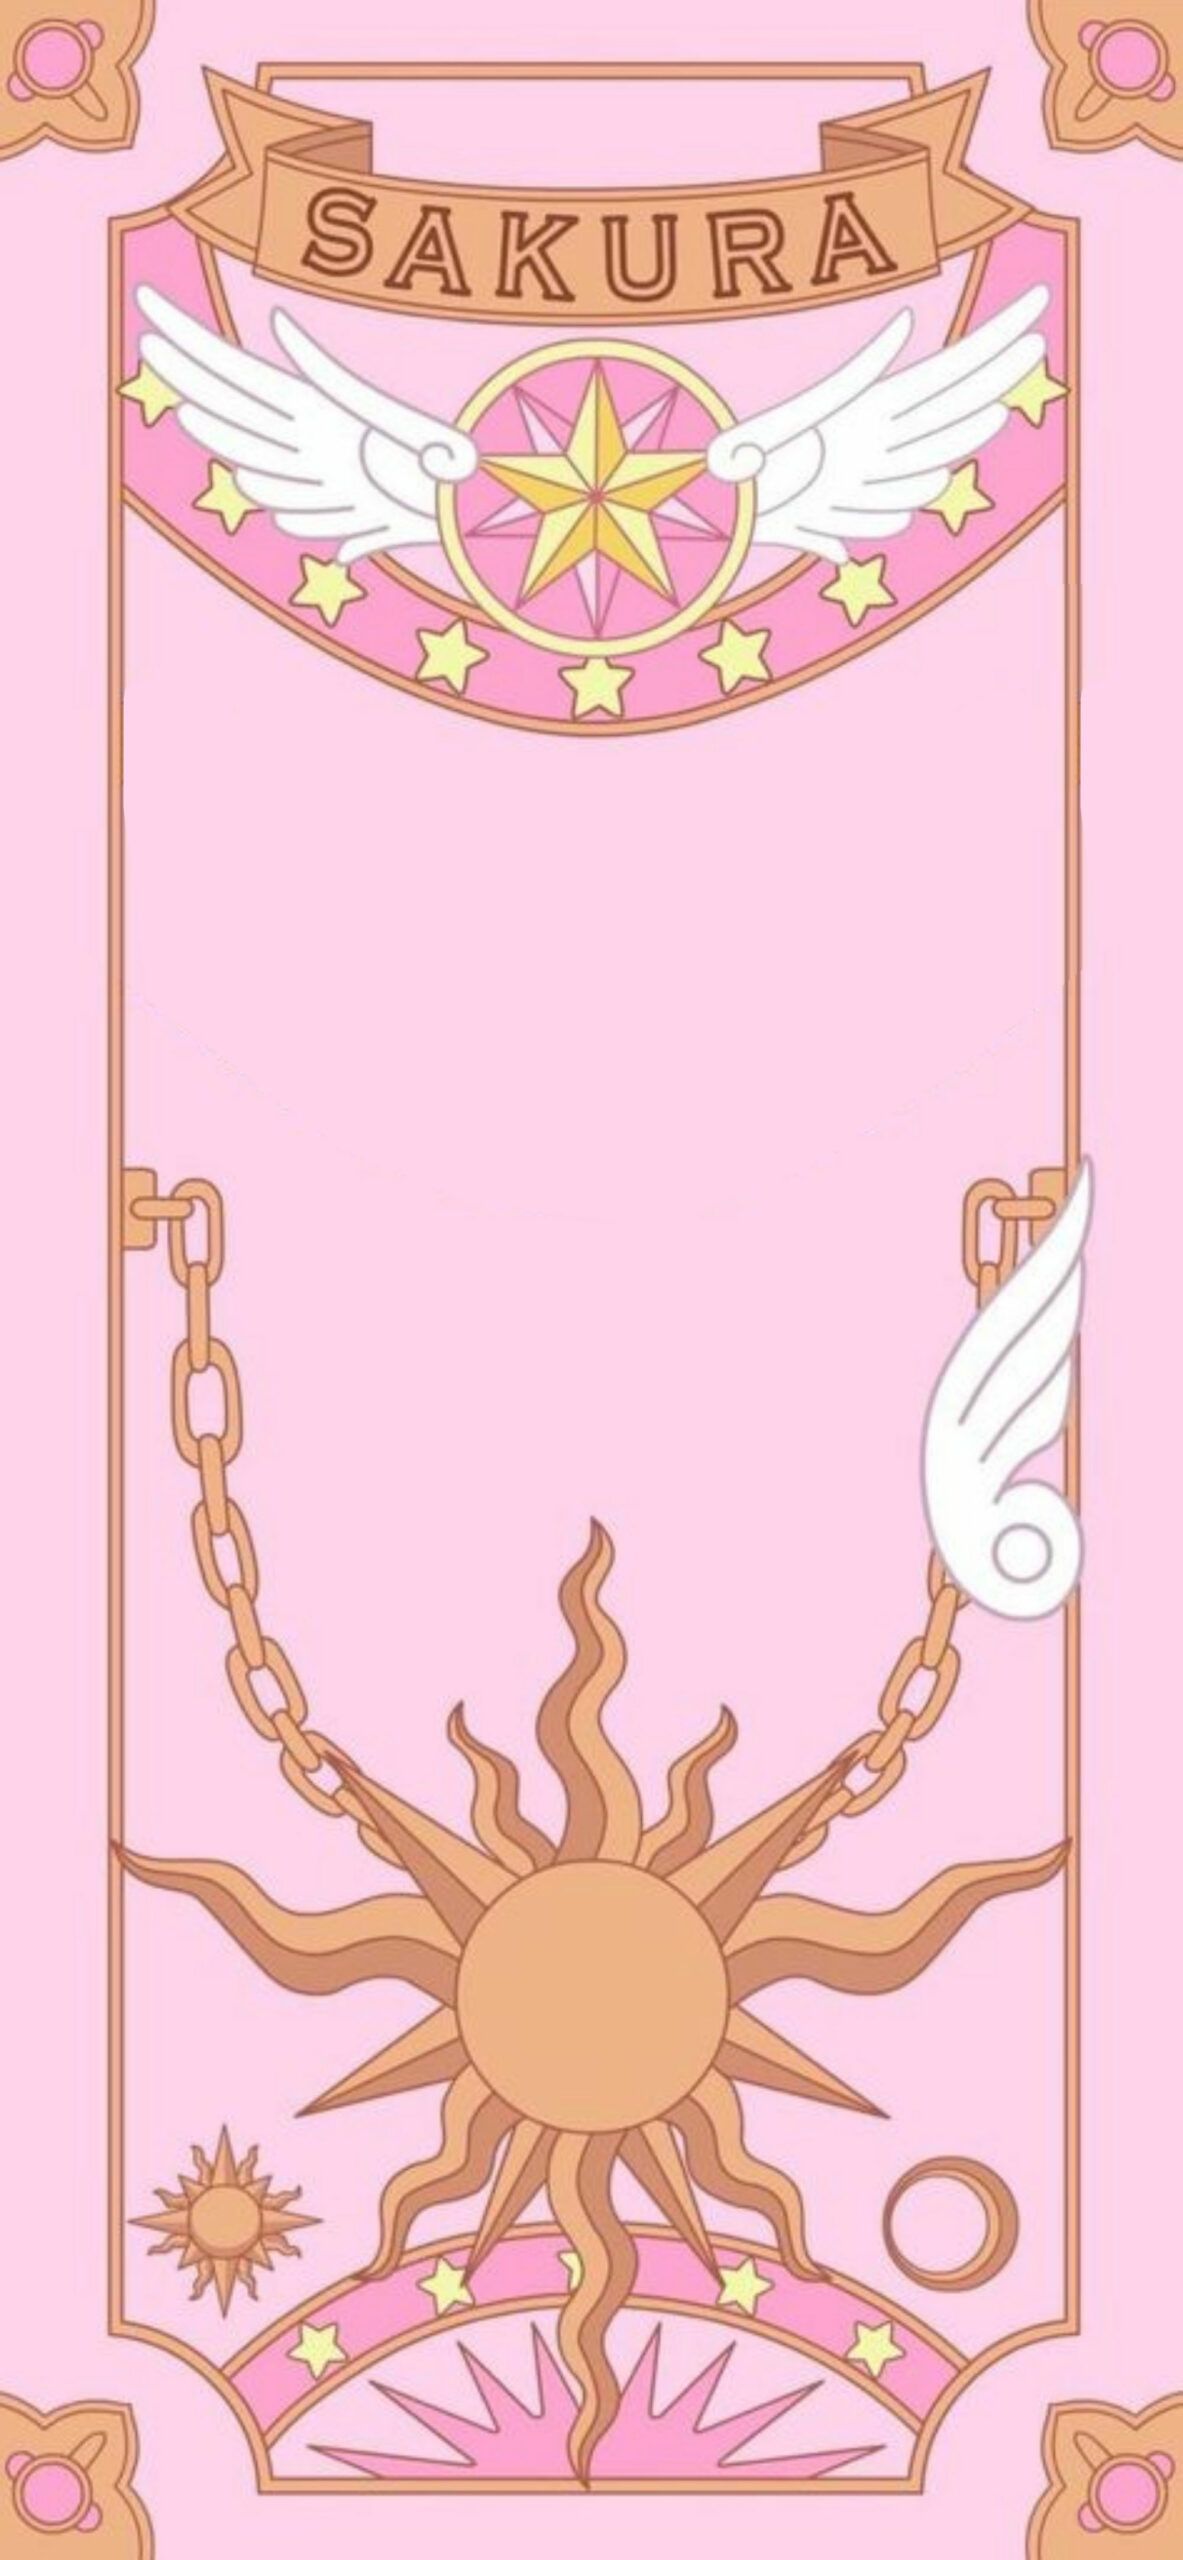 Pink background, card captor sakura wallpaper, golden frame, with the name sakura, and the logo - Cancer